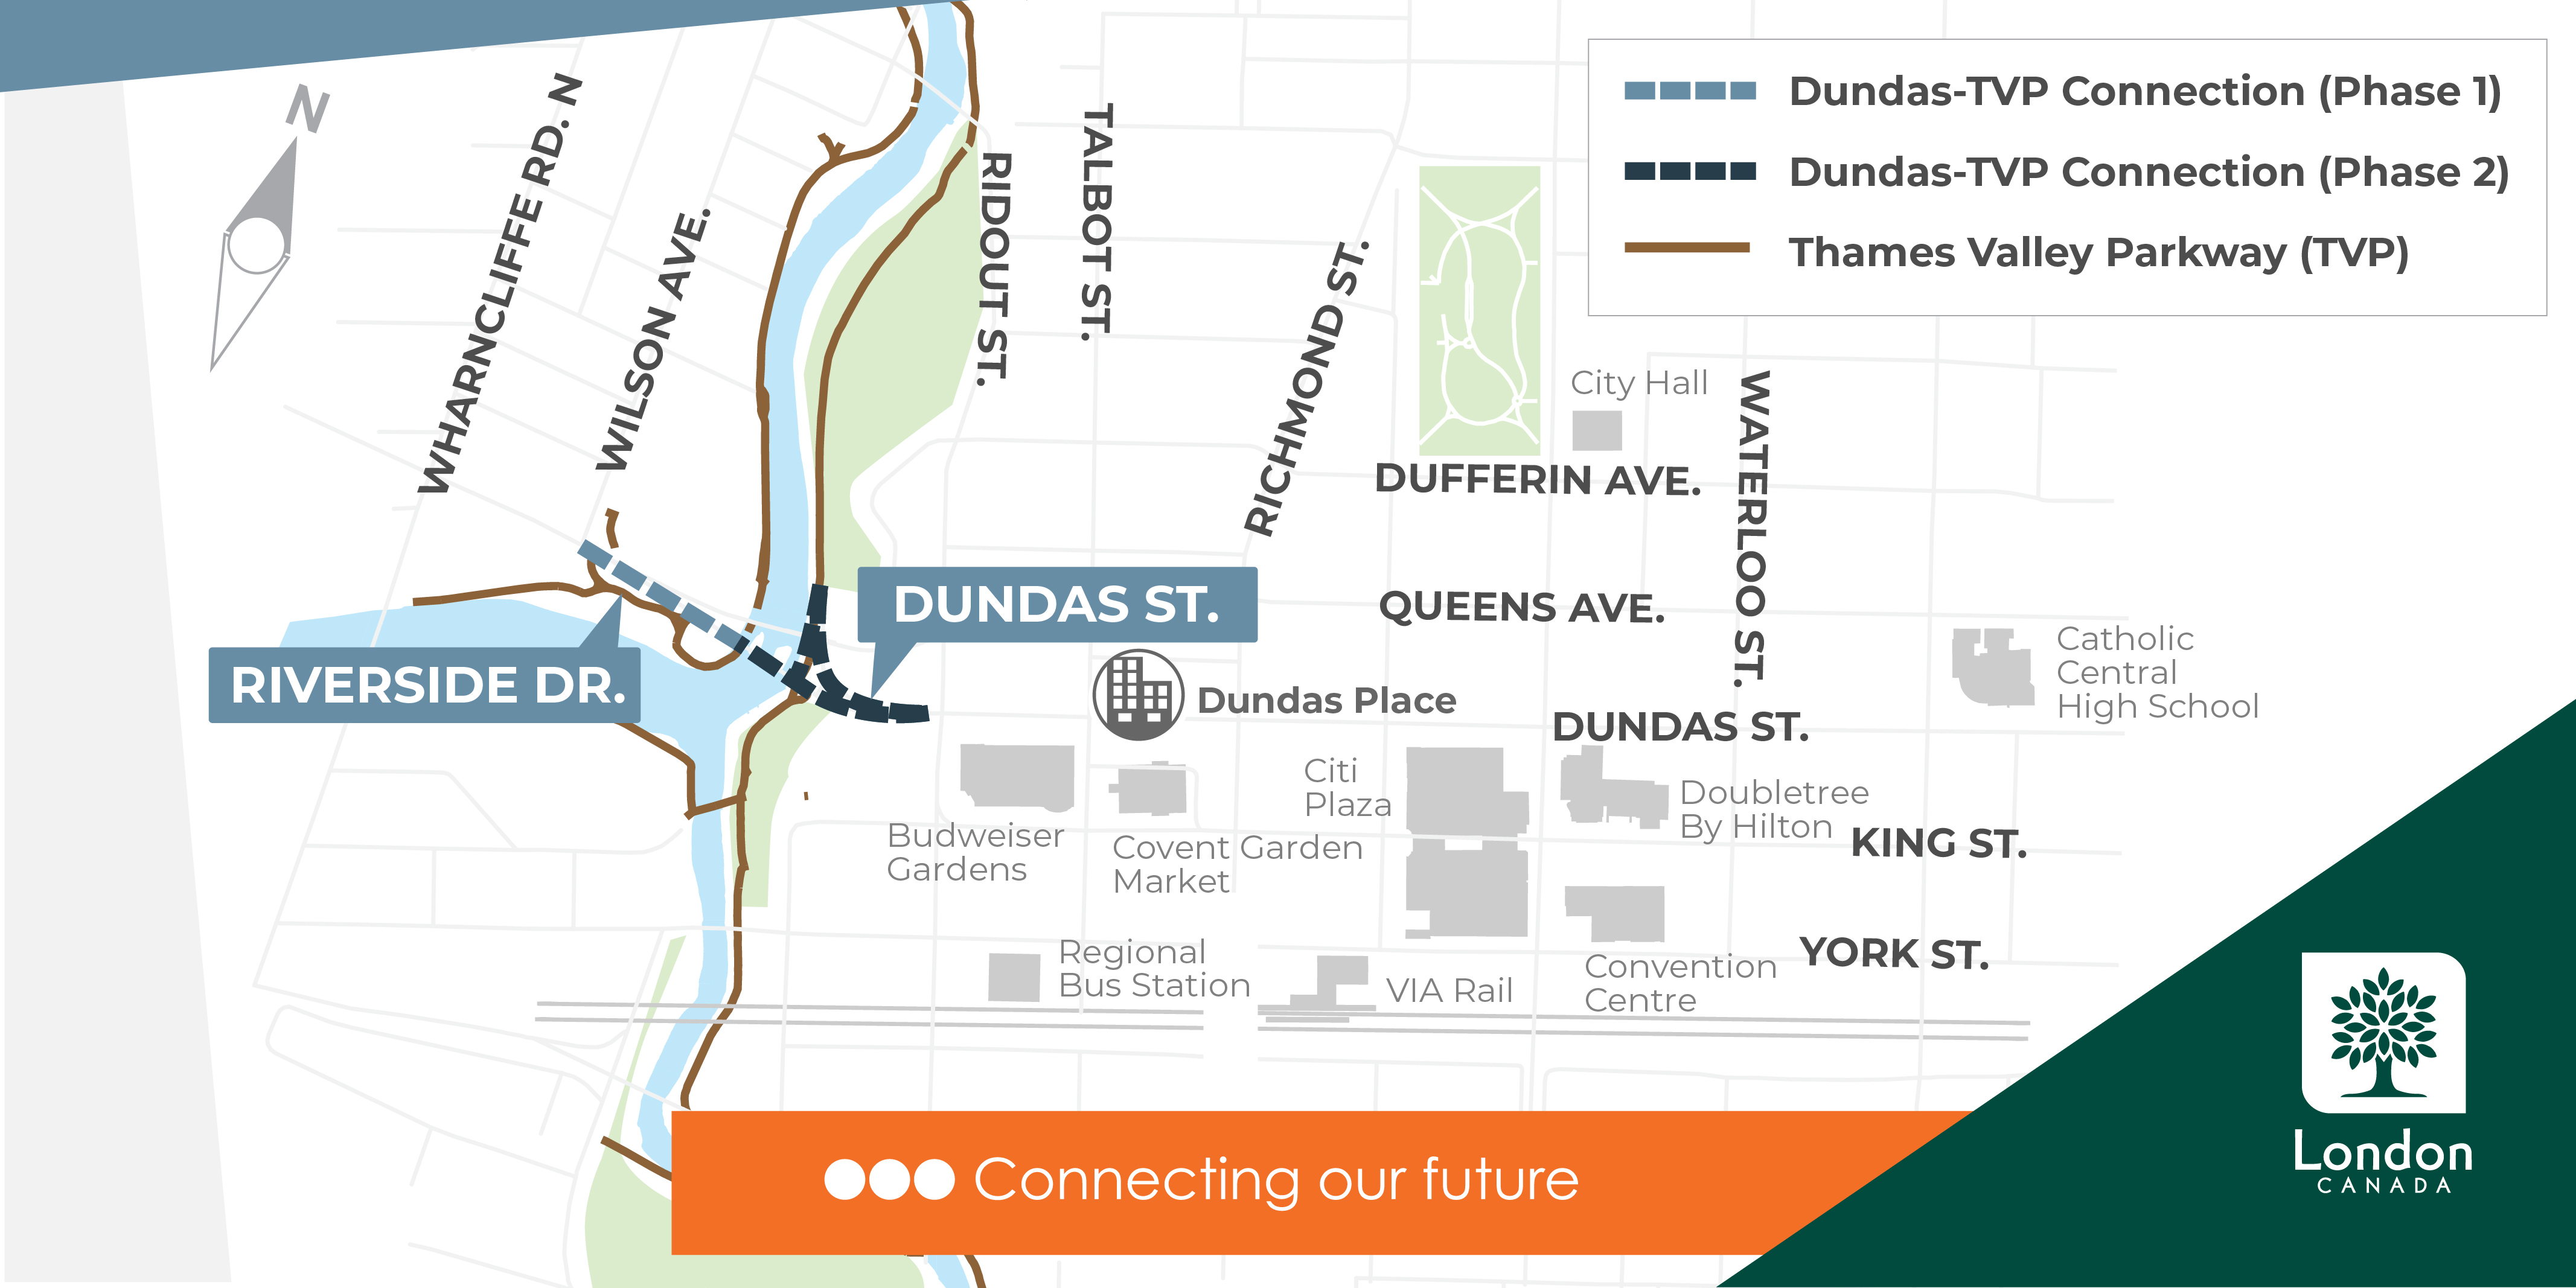 Dundas-TVP Connection Project Map